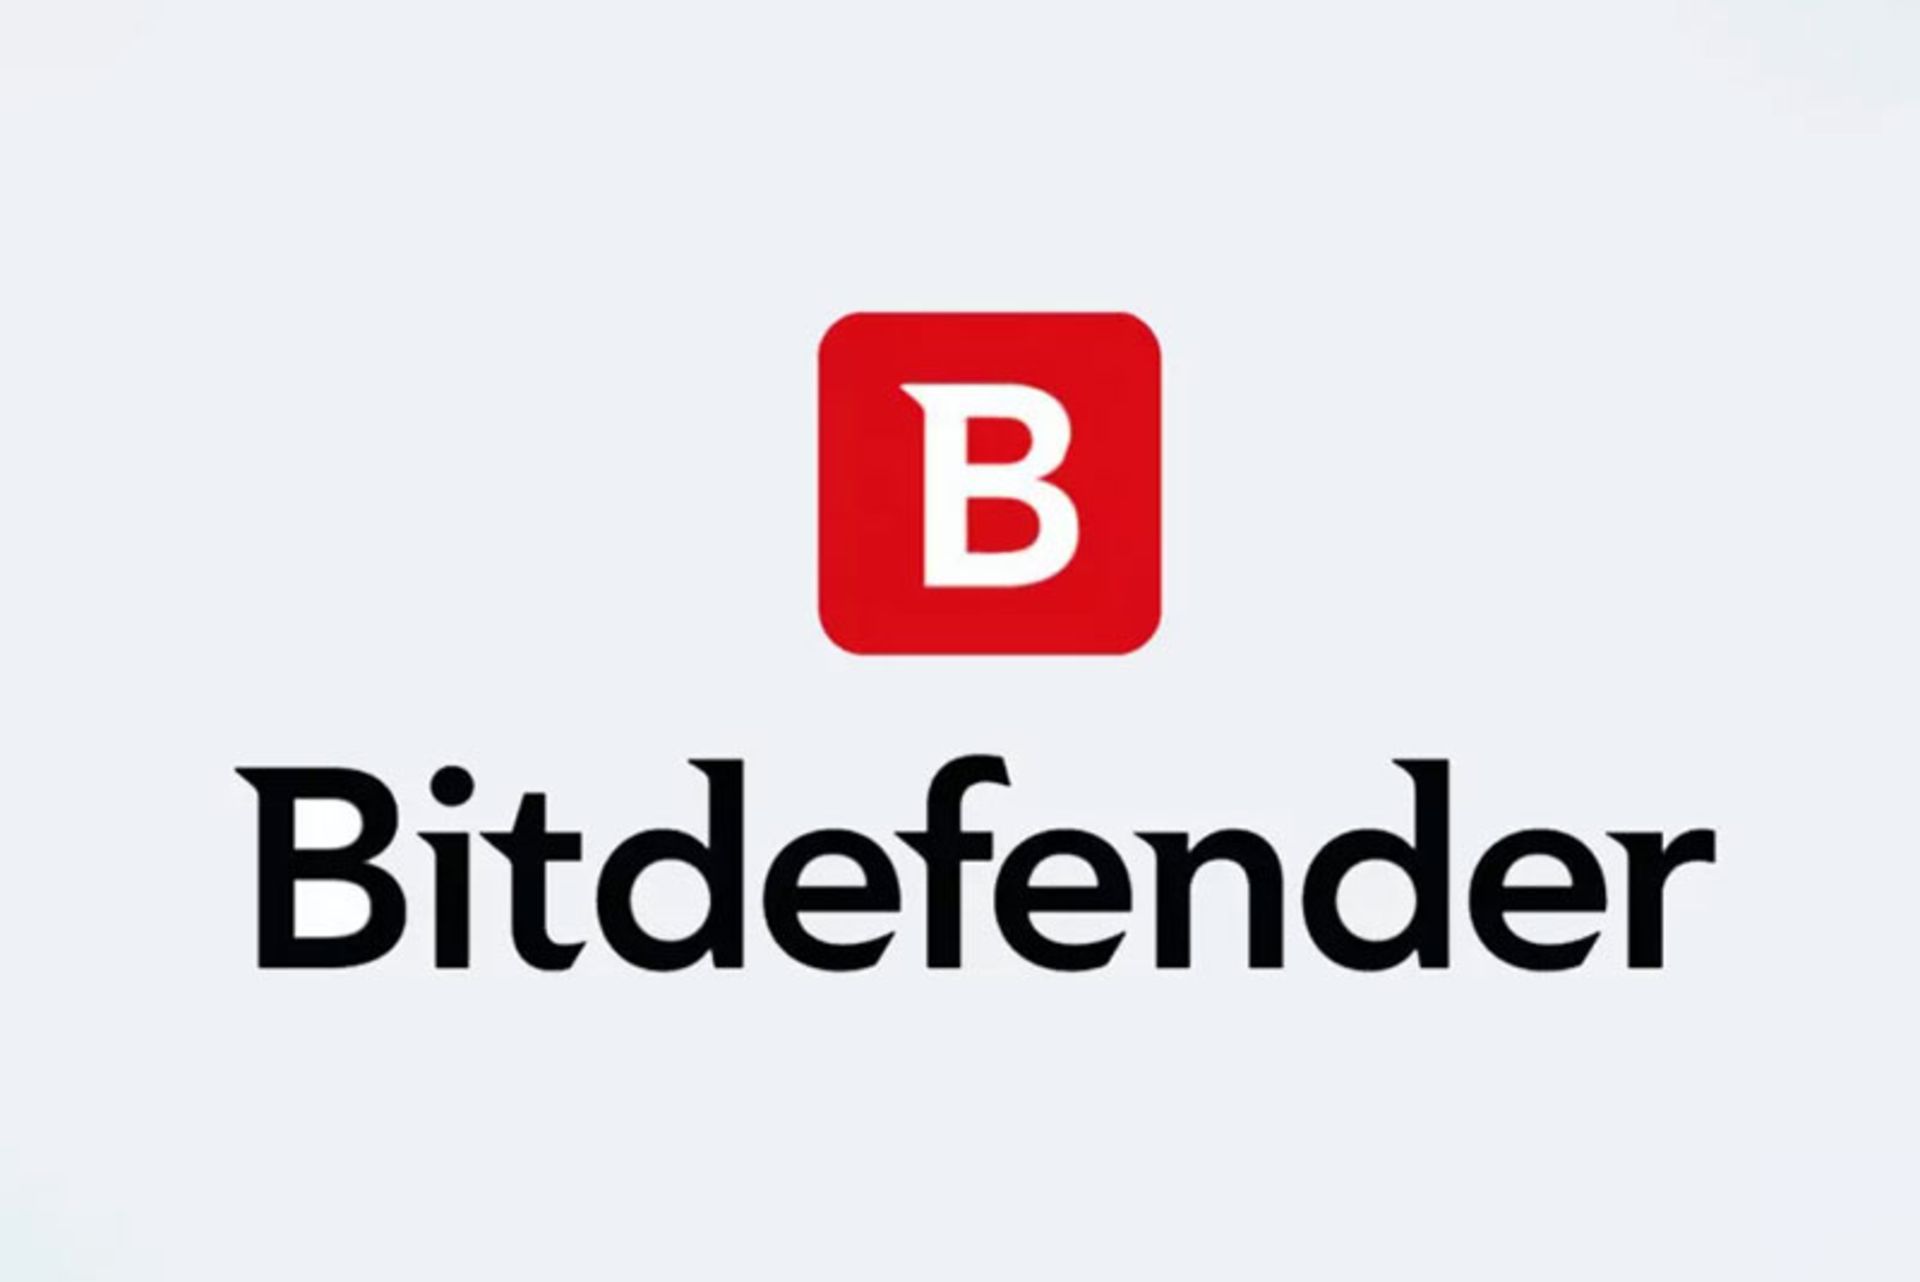 Bitdefender app logo